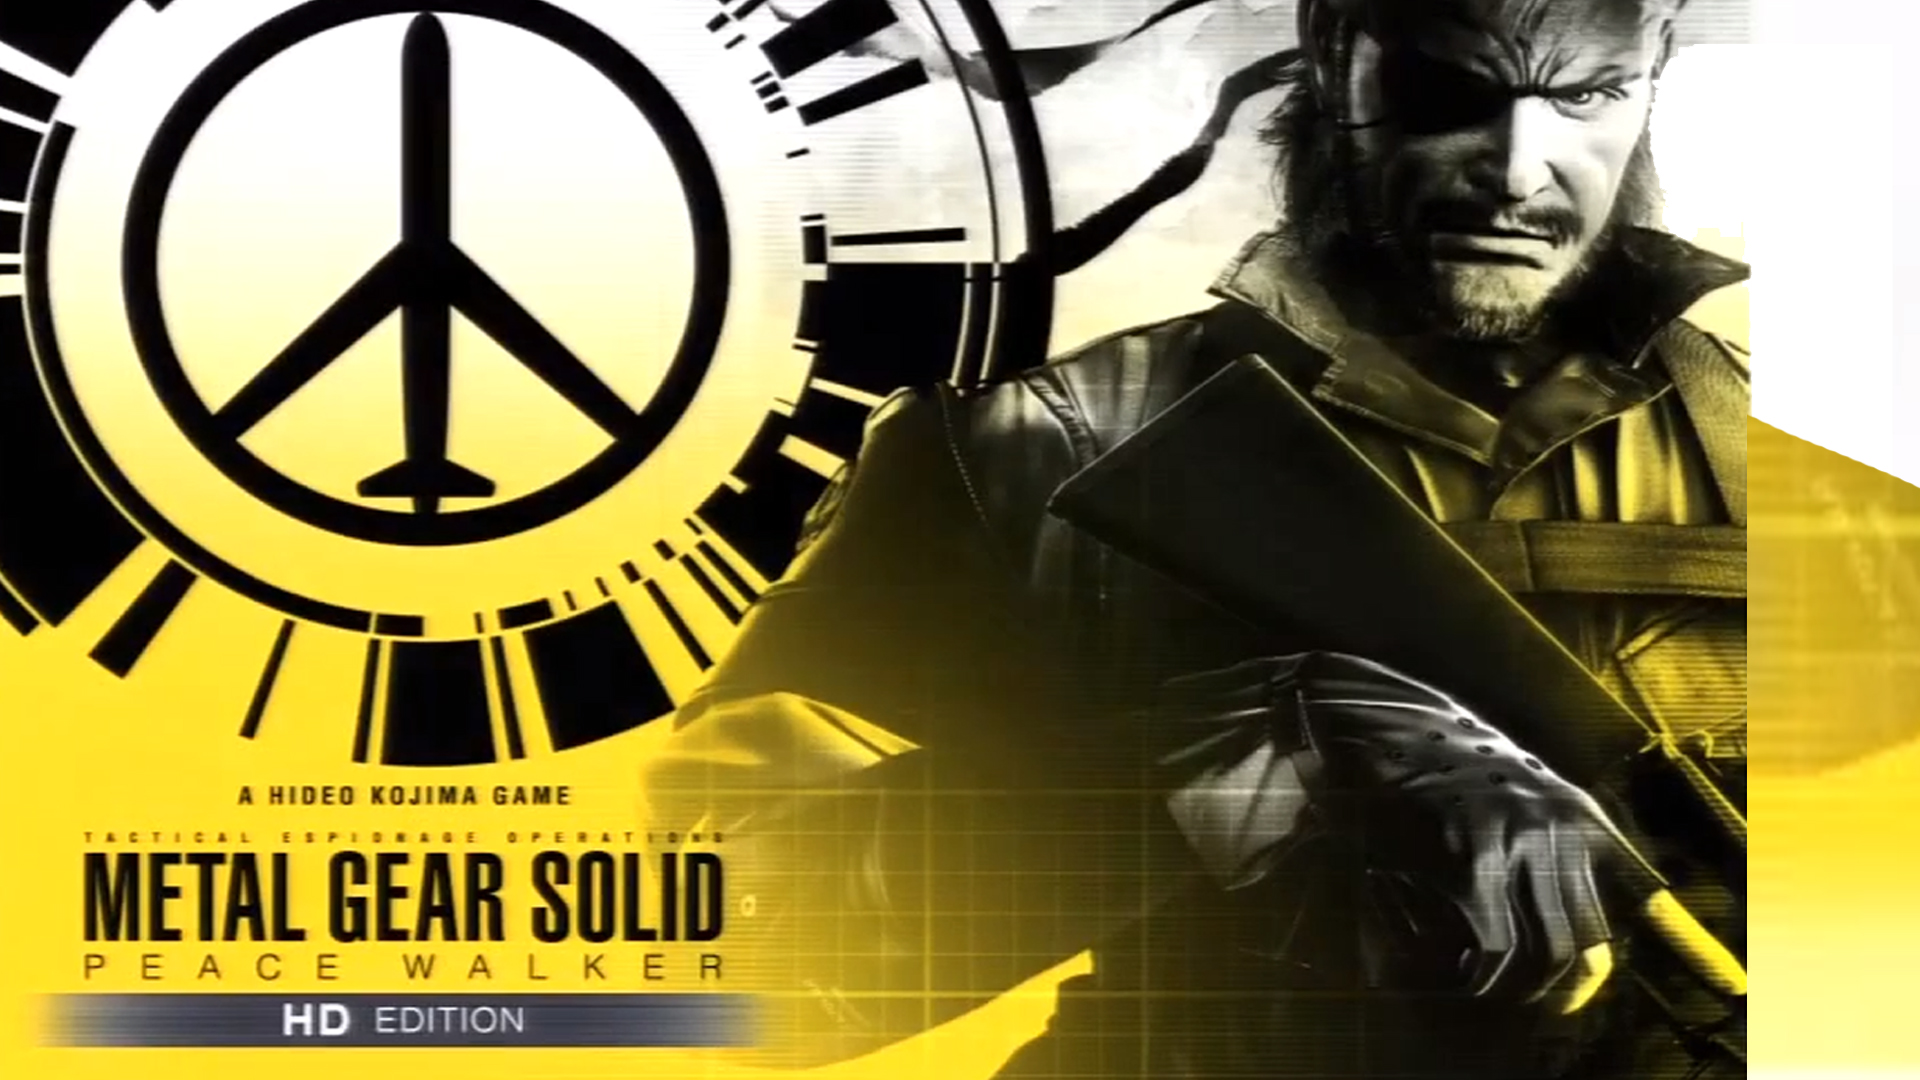 Metal Gear Solid: Peace Walker Backgrounds, Compatible - PC, Mobile, Gadgets| 1920x1080 px